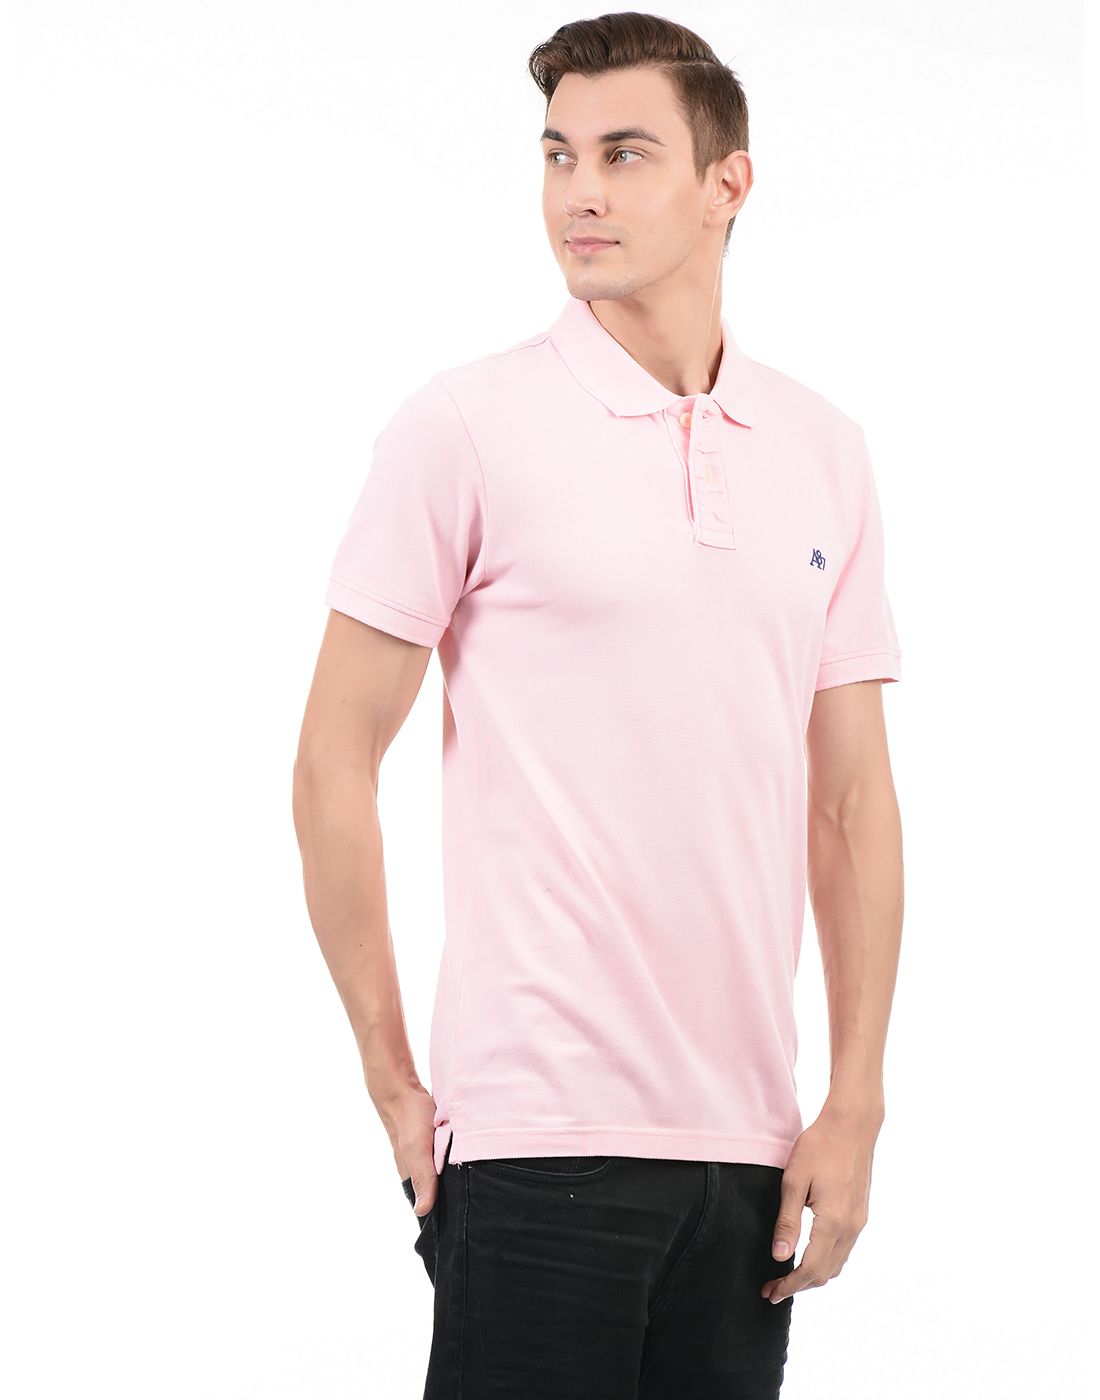 Aeropostale Pink Regular Fit Polo T Shirt - Buy Aeropostale Pink ...